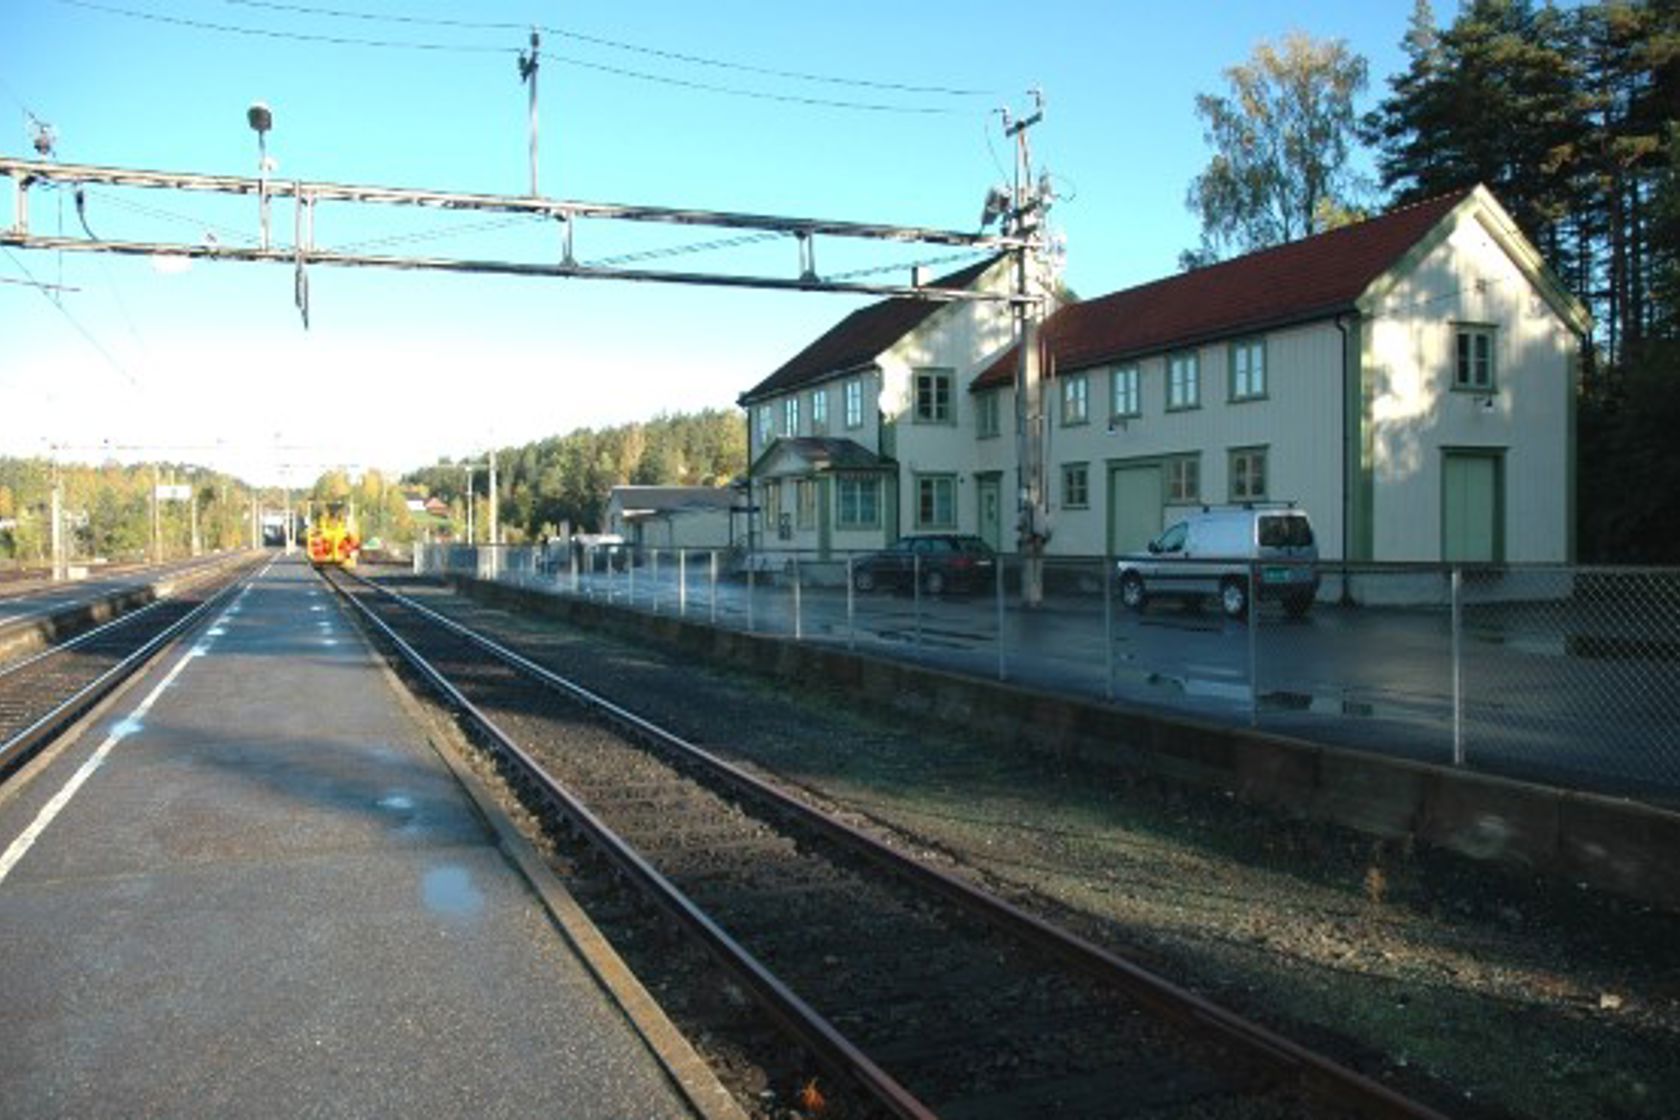 Exterior view of Neslandsvatn station